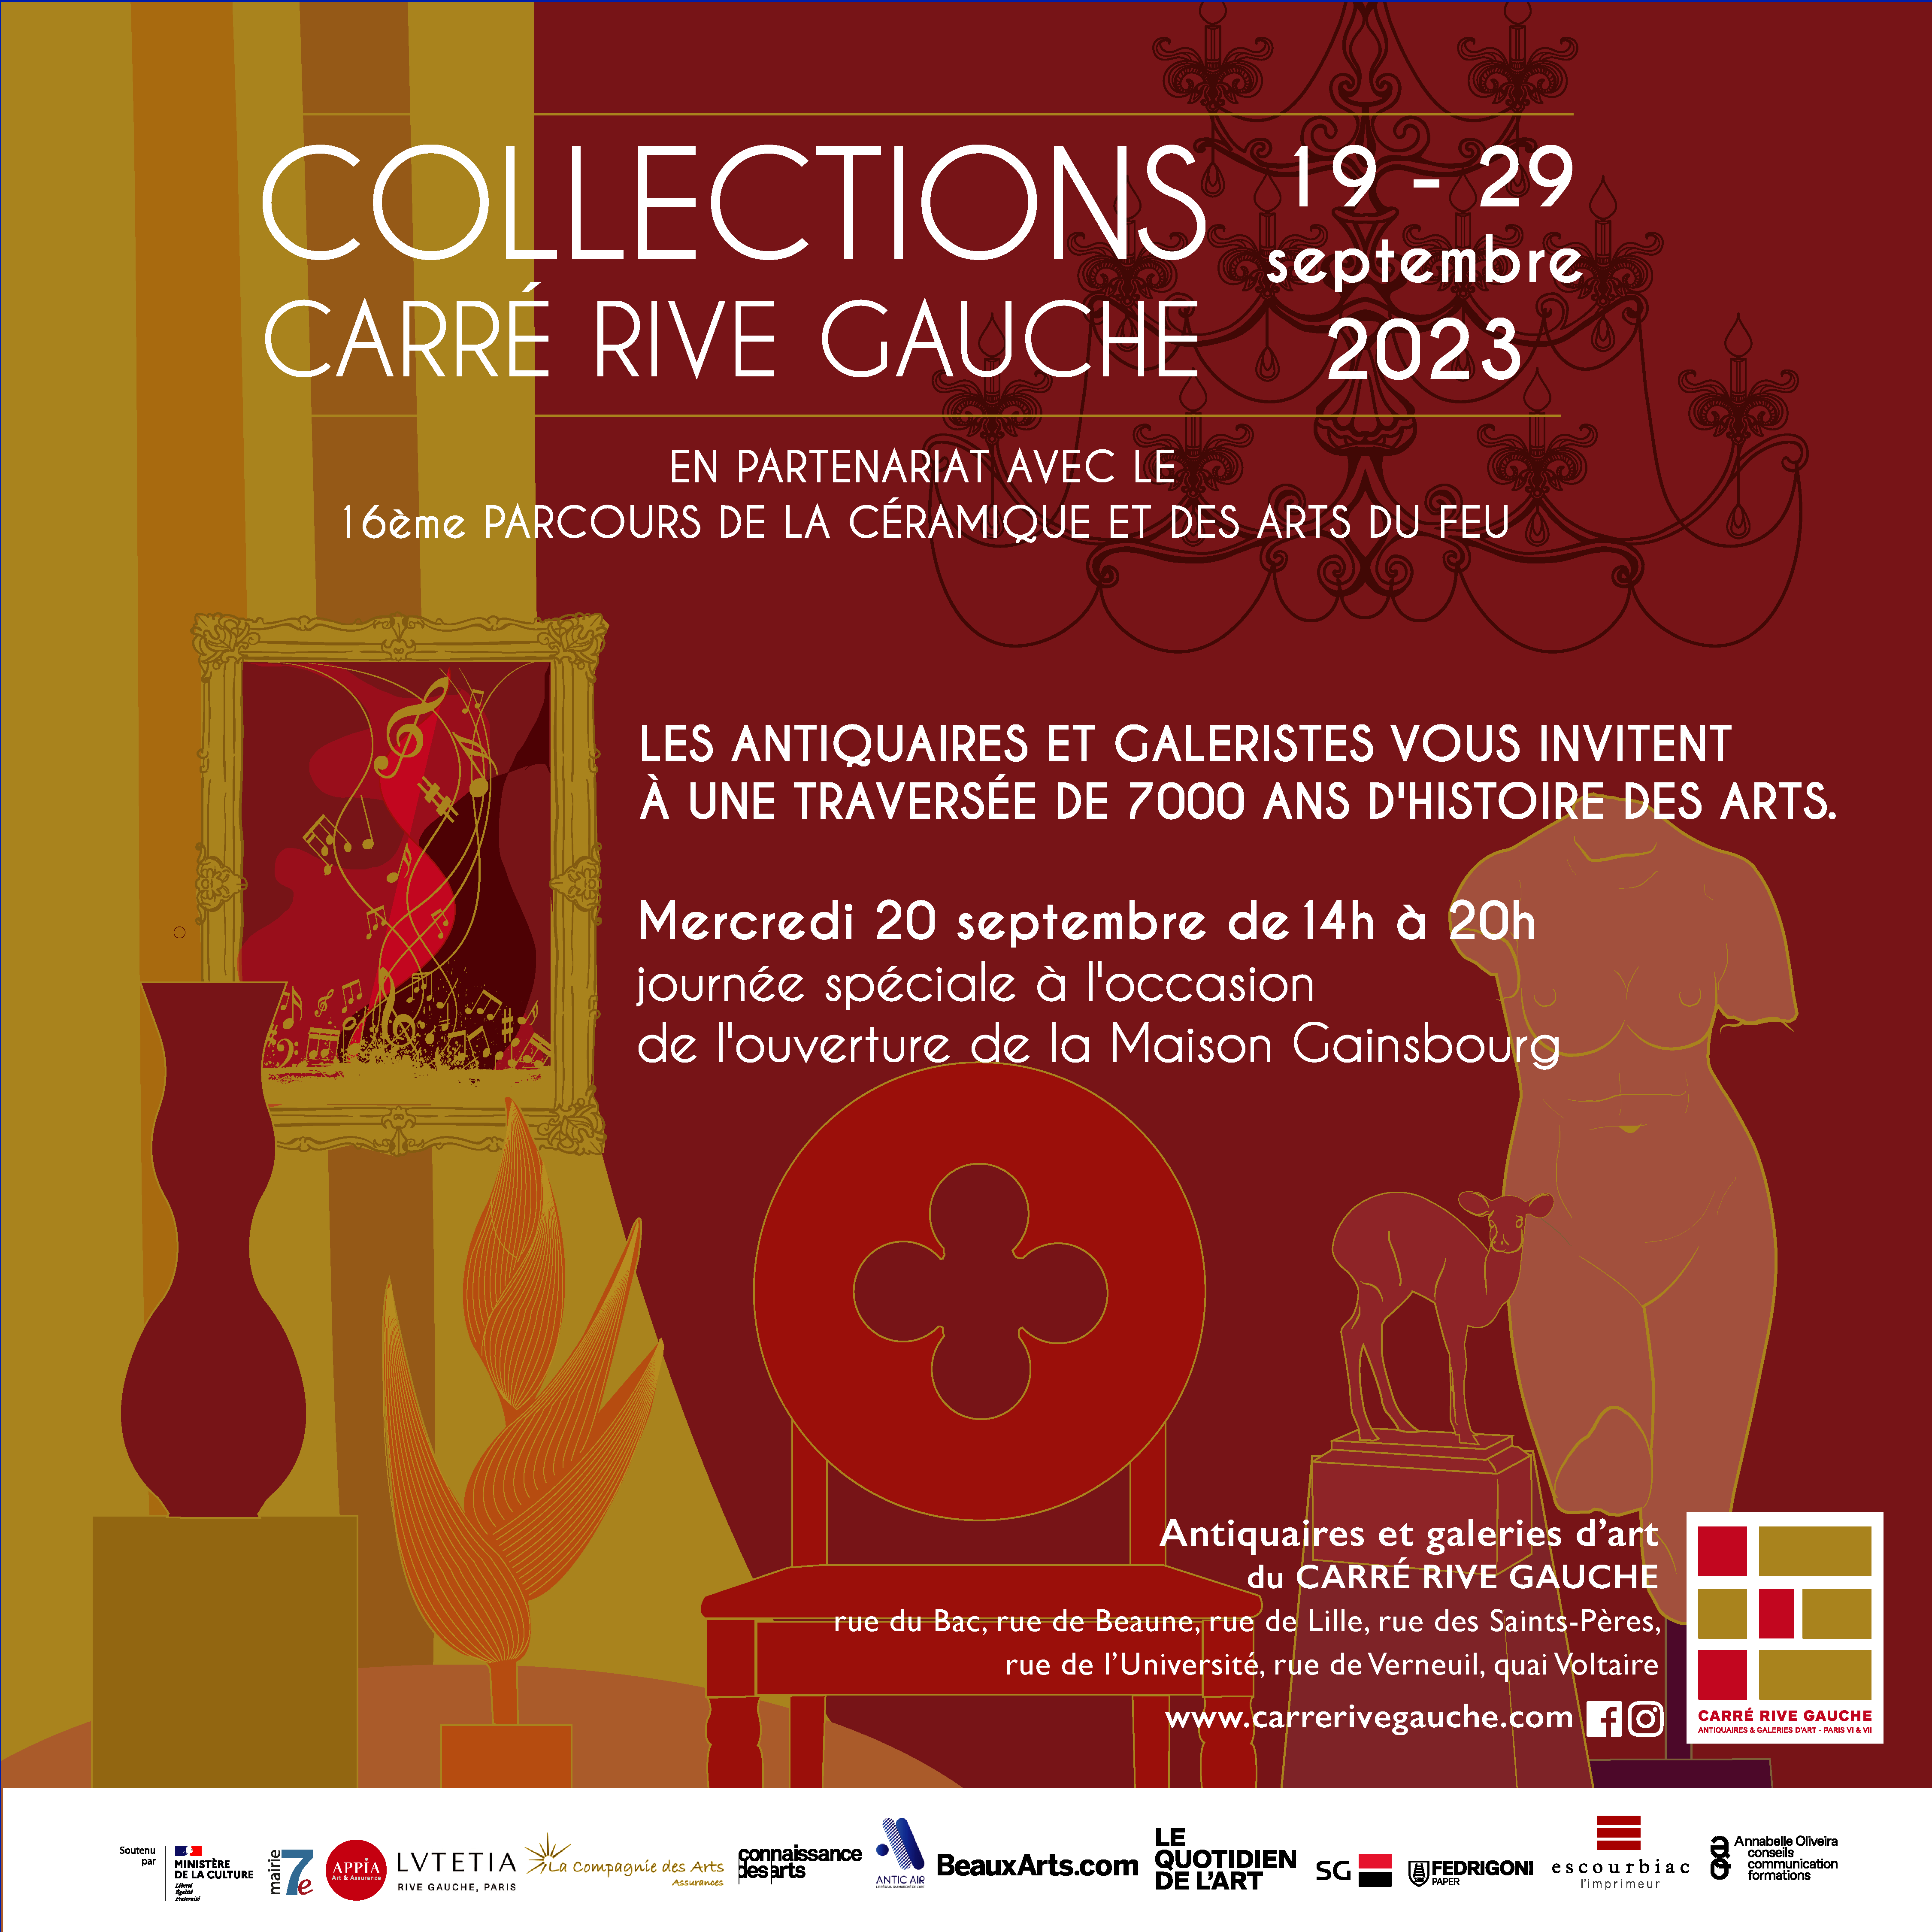 Collections Carré Rive Gauche